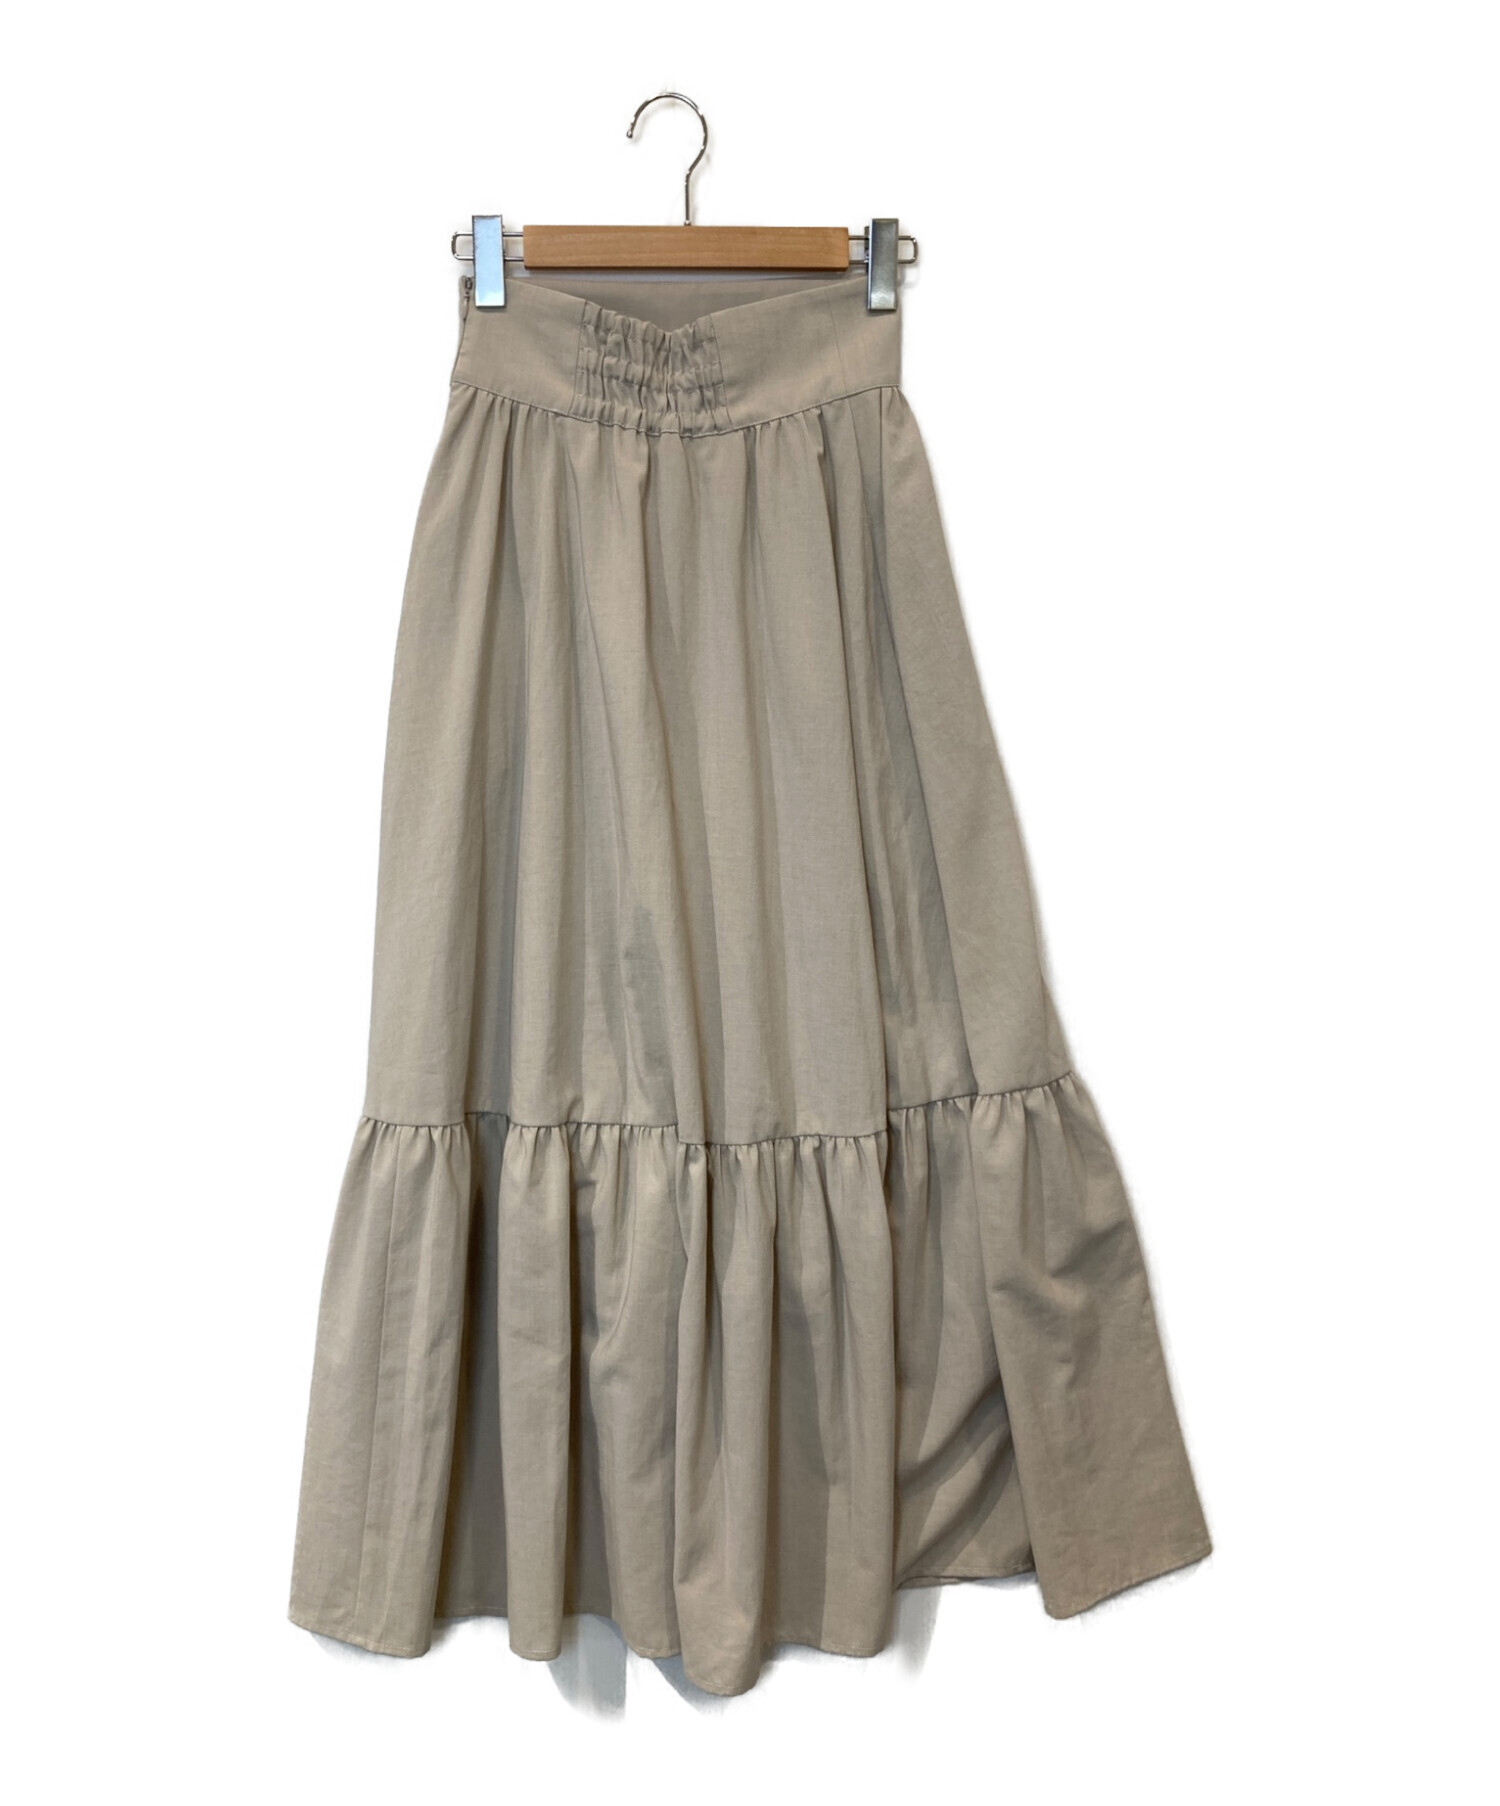 CADUNE (カデュネ) ギャザースカート ベージュ サイズ:36 未使用品